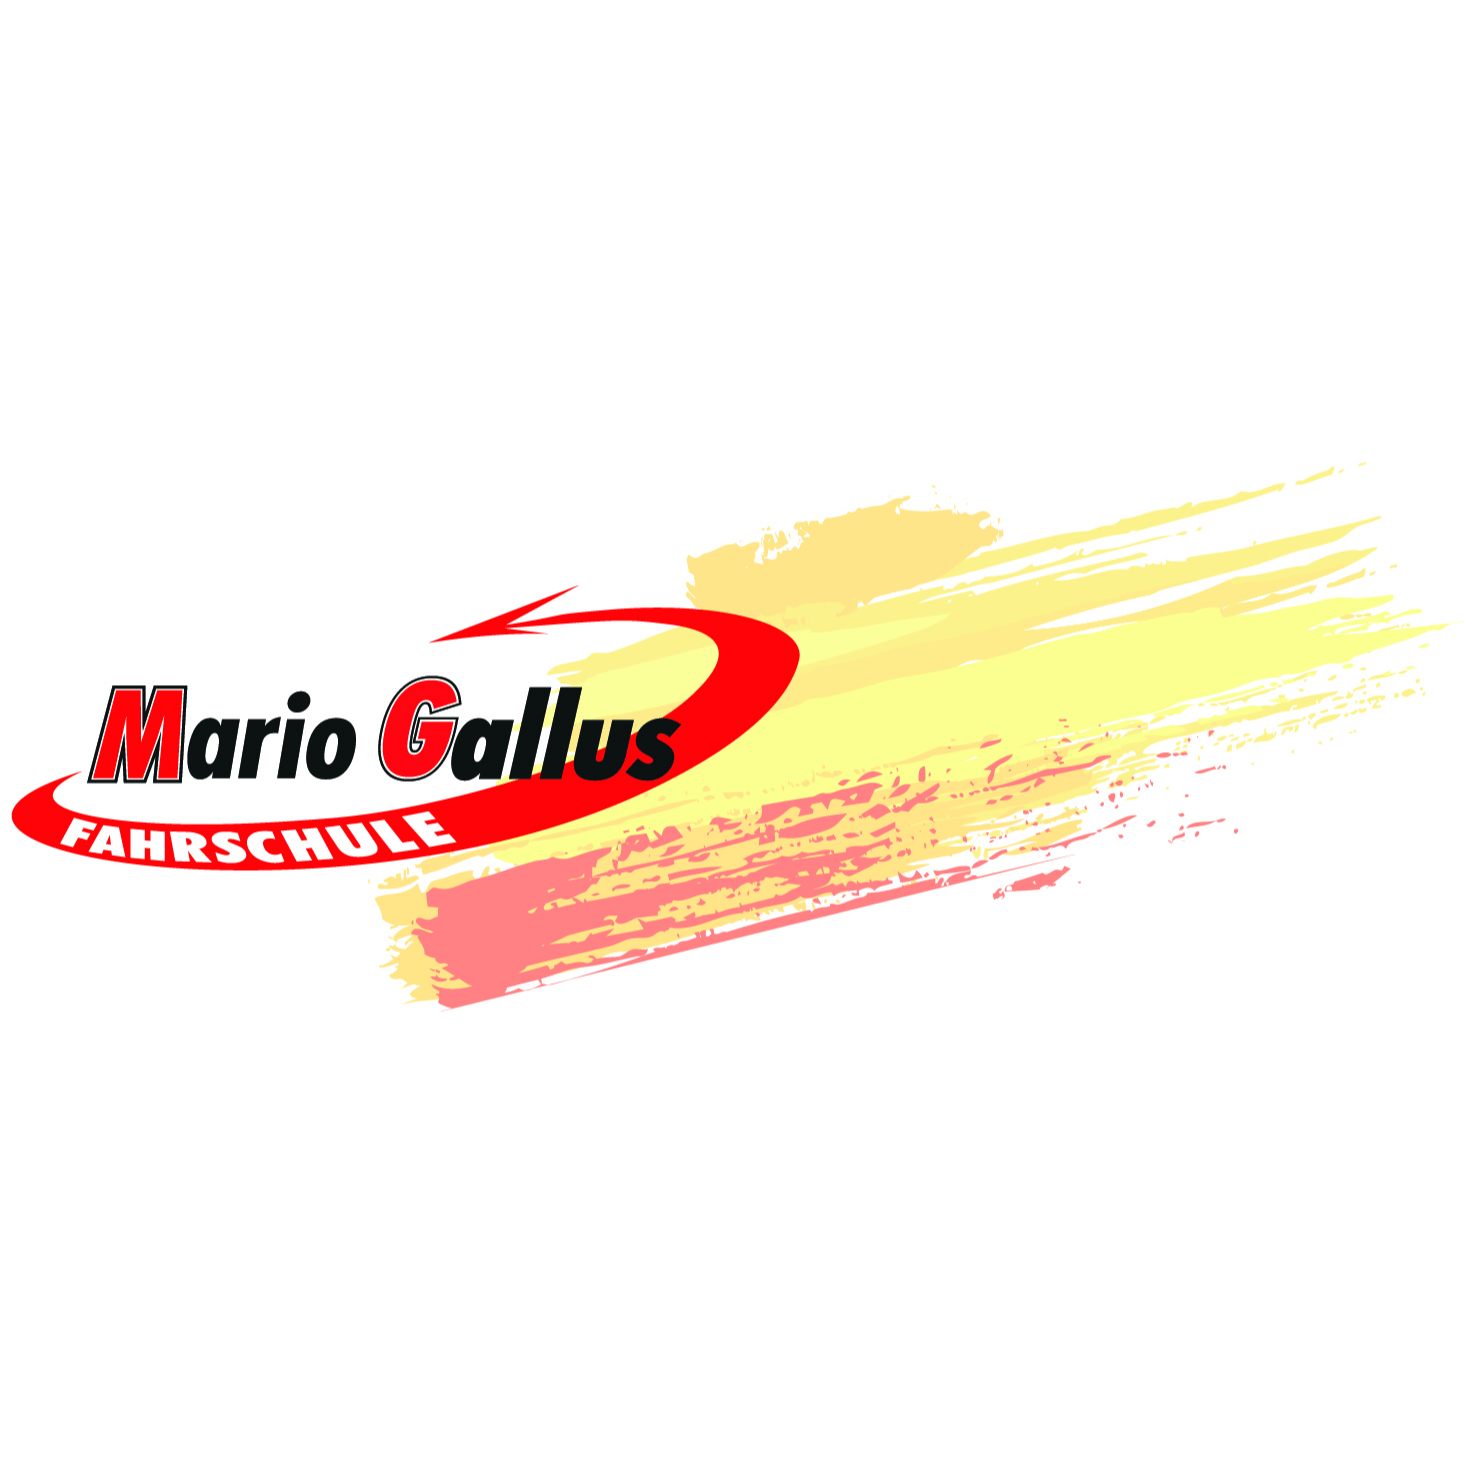 Fahrschule Mario Gallus Logo